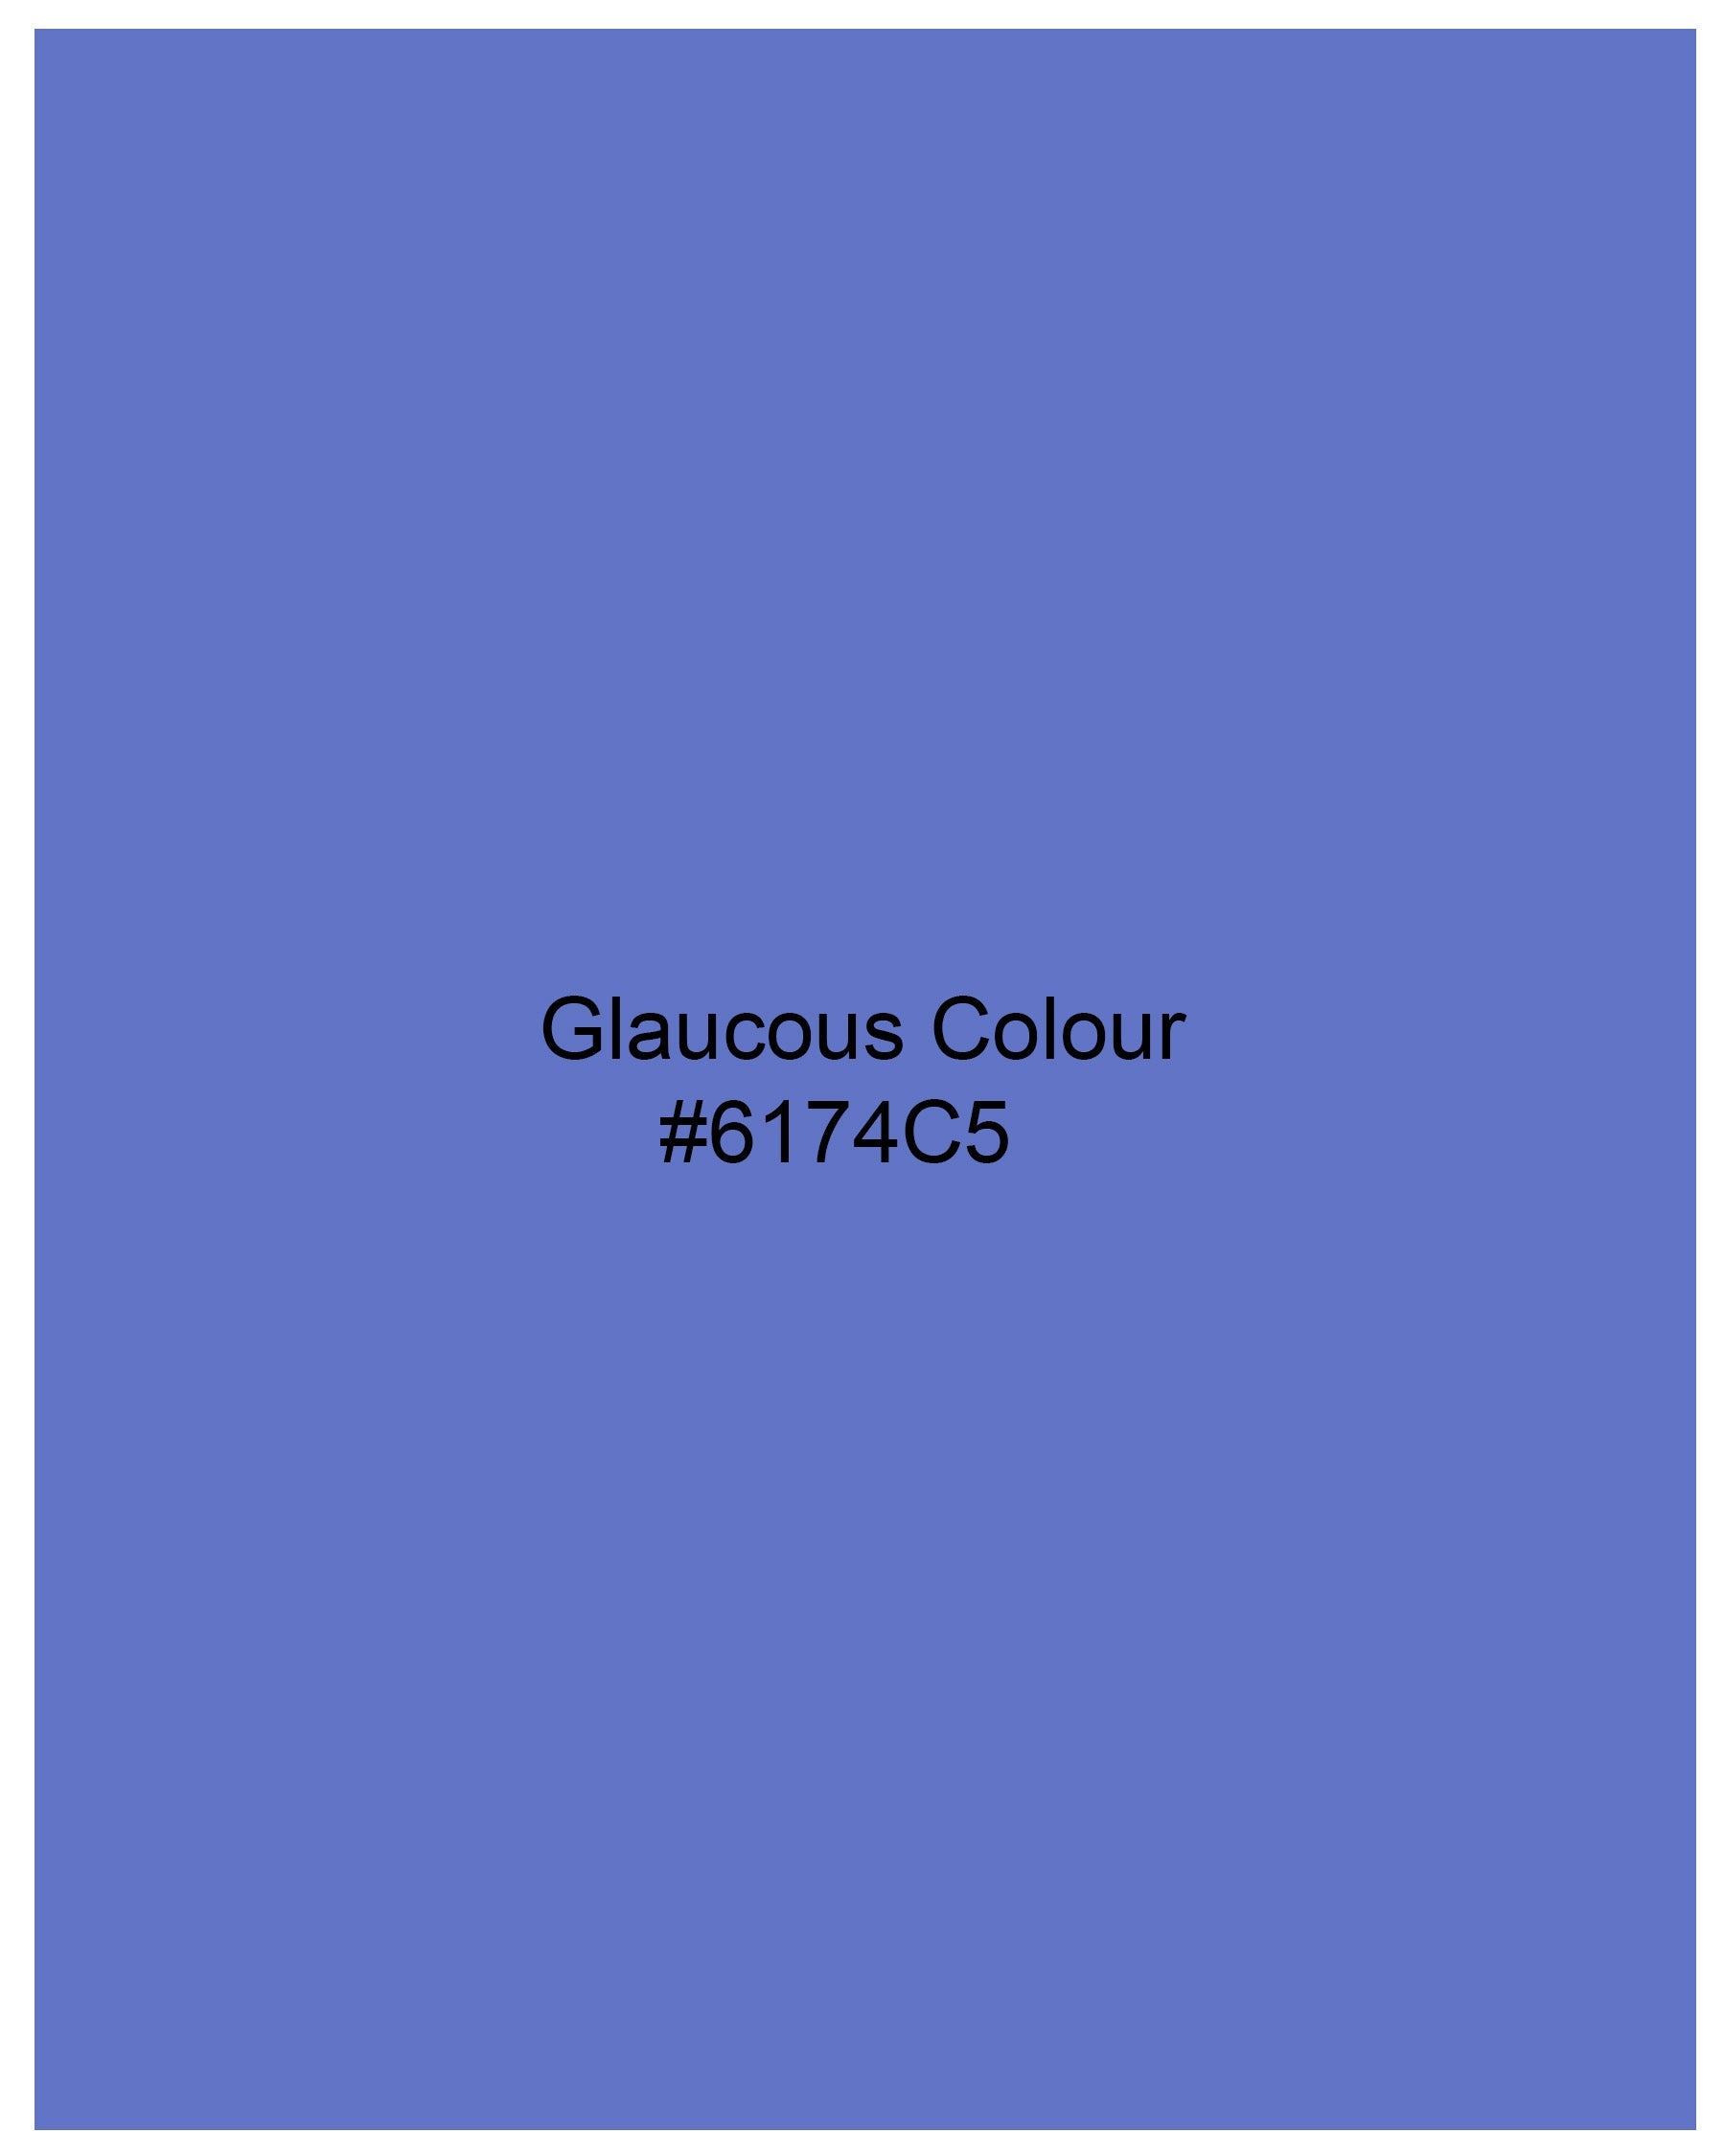 Glaucous Blue Premium Giza Cotton Chambray Shirt 8046-CP-38,8046-CP-38,8046-CP-39,8046-CP-39,8046-CP-40,8046-CP-40,8046-CP-42,8046-CP-42,8046-CP-44,8046-CP-44,8046-CP-46,8046-CP-46,8046-CP-48,8046-CP-48,8046-CP-50,8046-CP-50,8046-CP-52,8046-CP-52